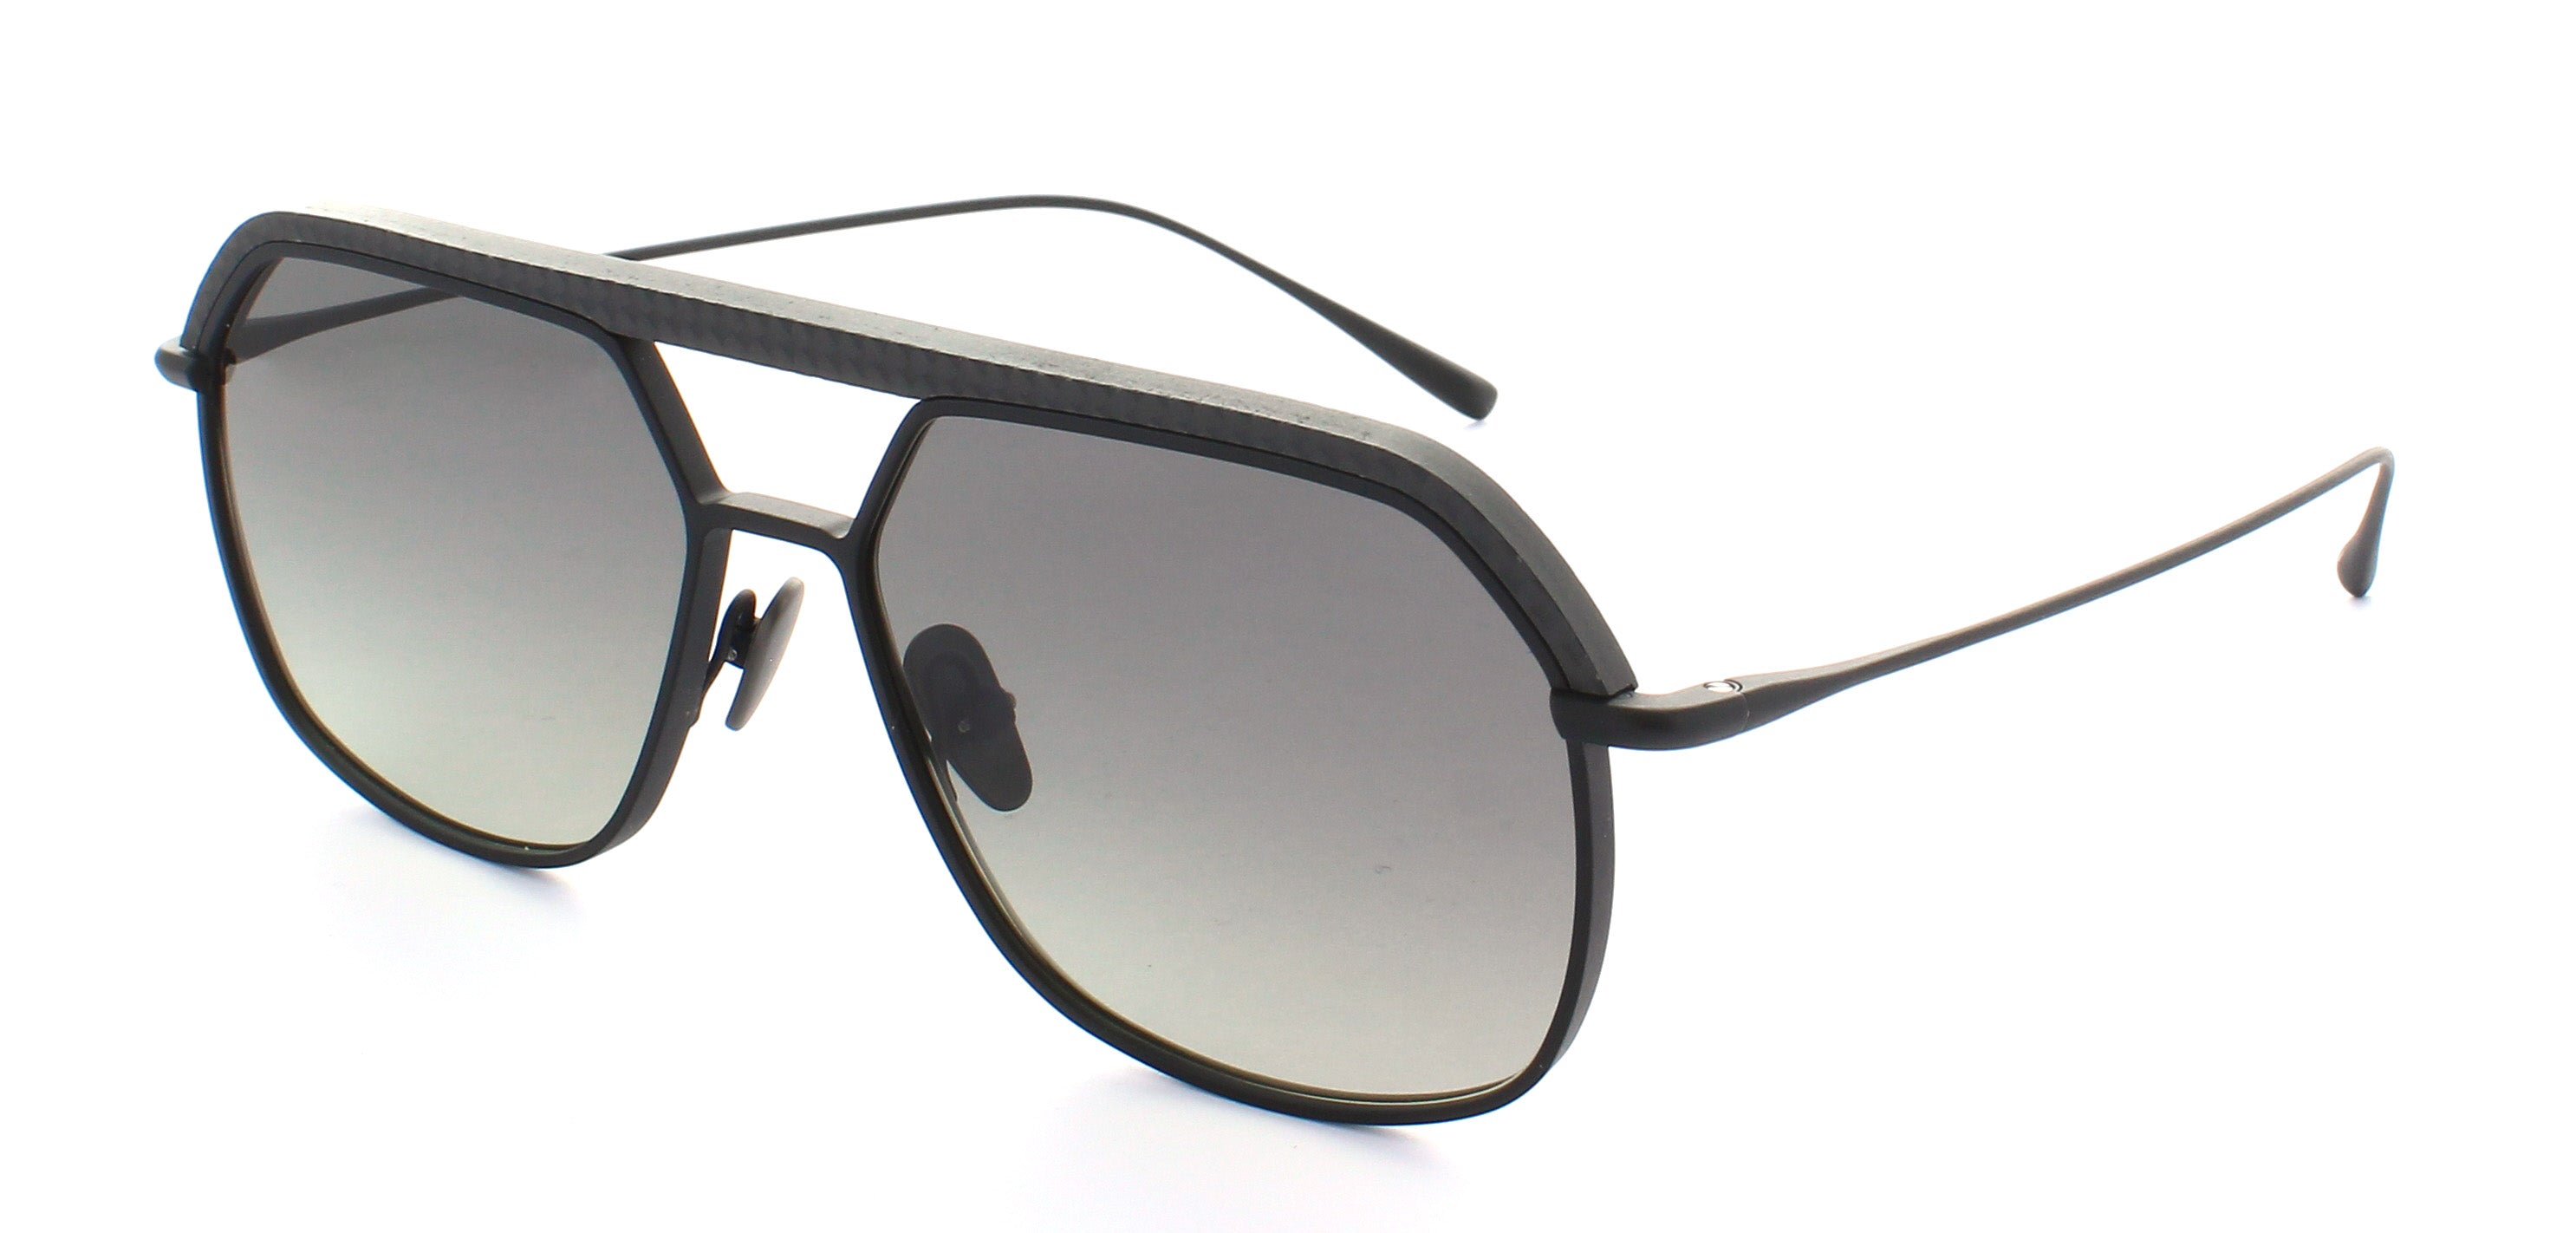 Sunglasses S8 - Matt Black